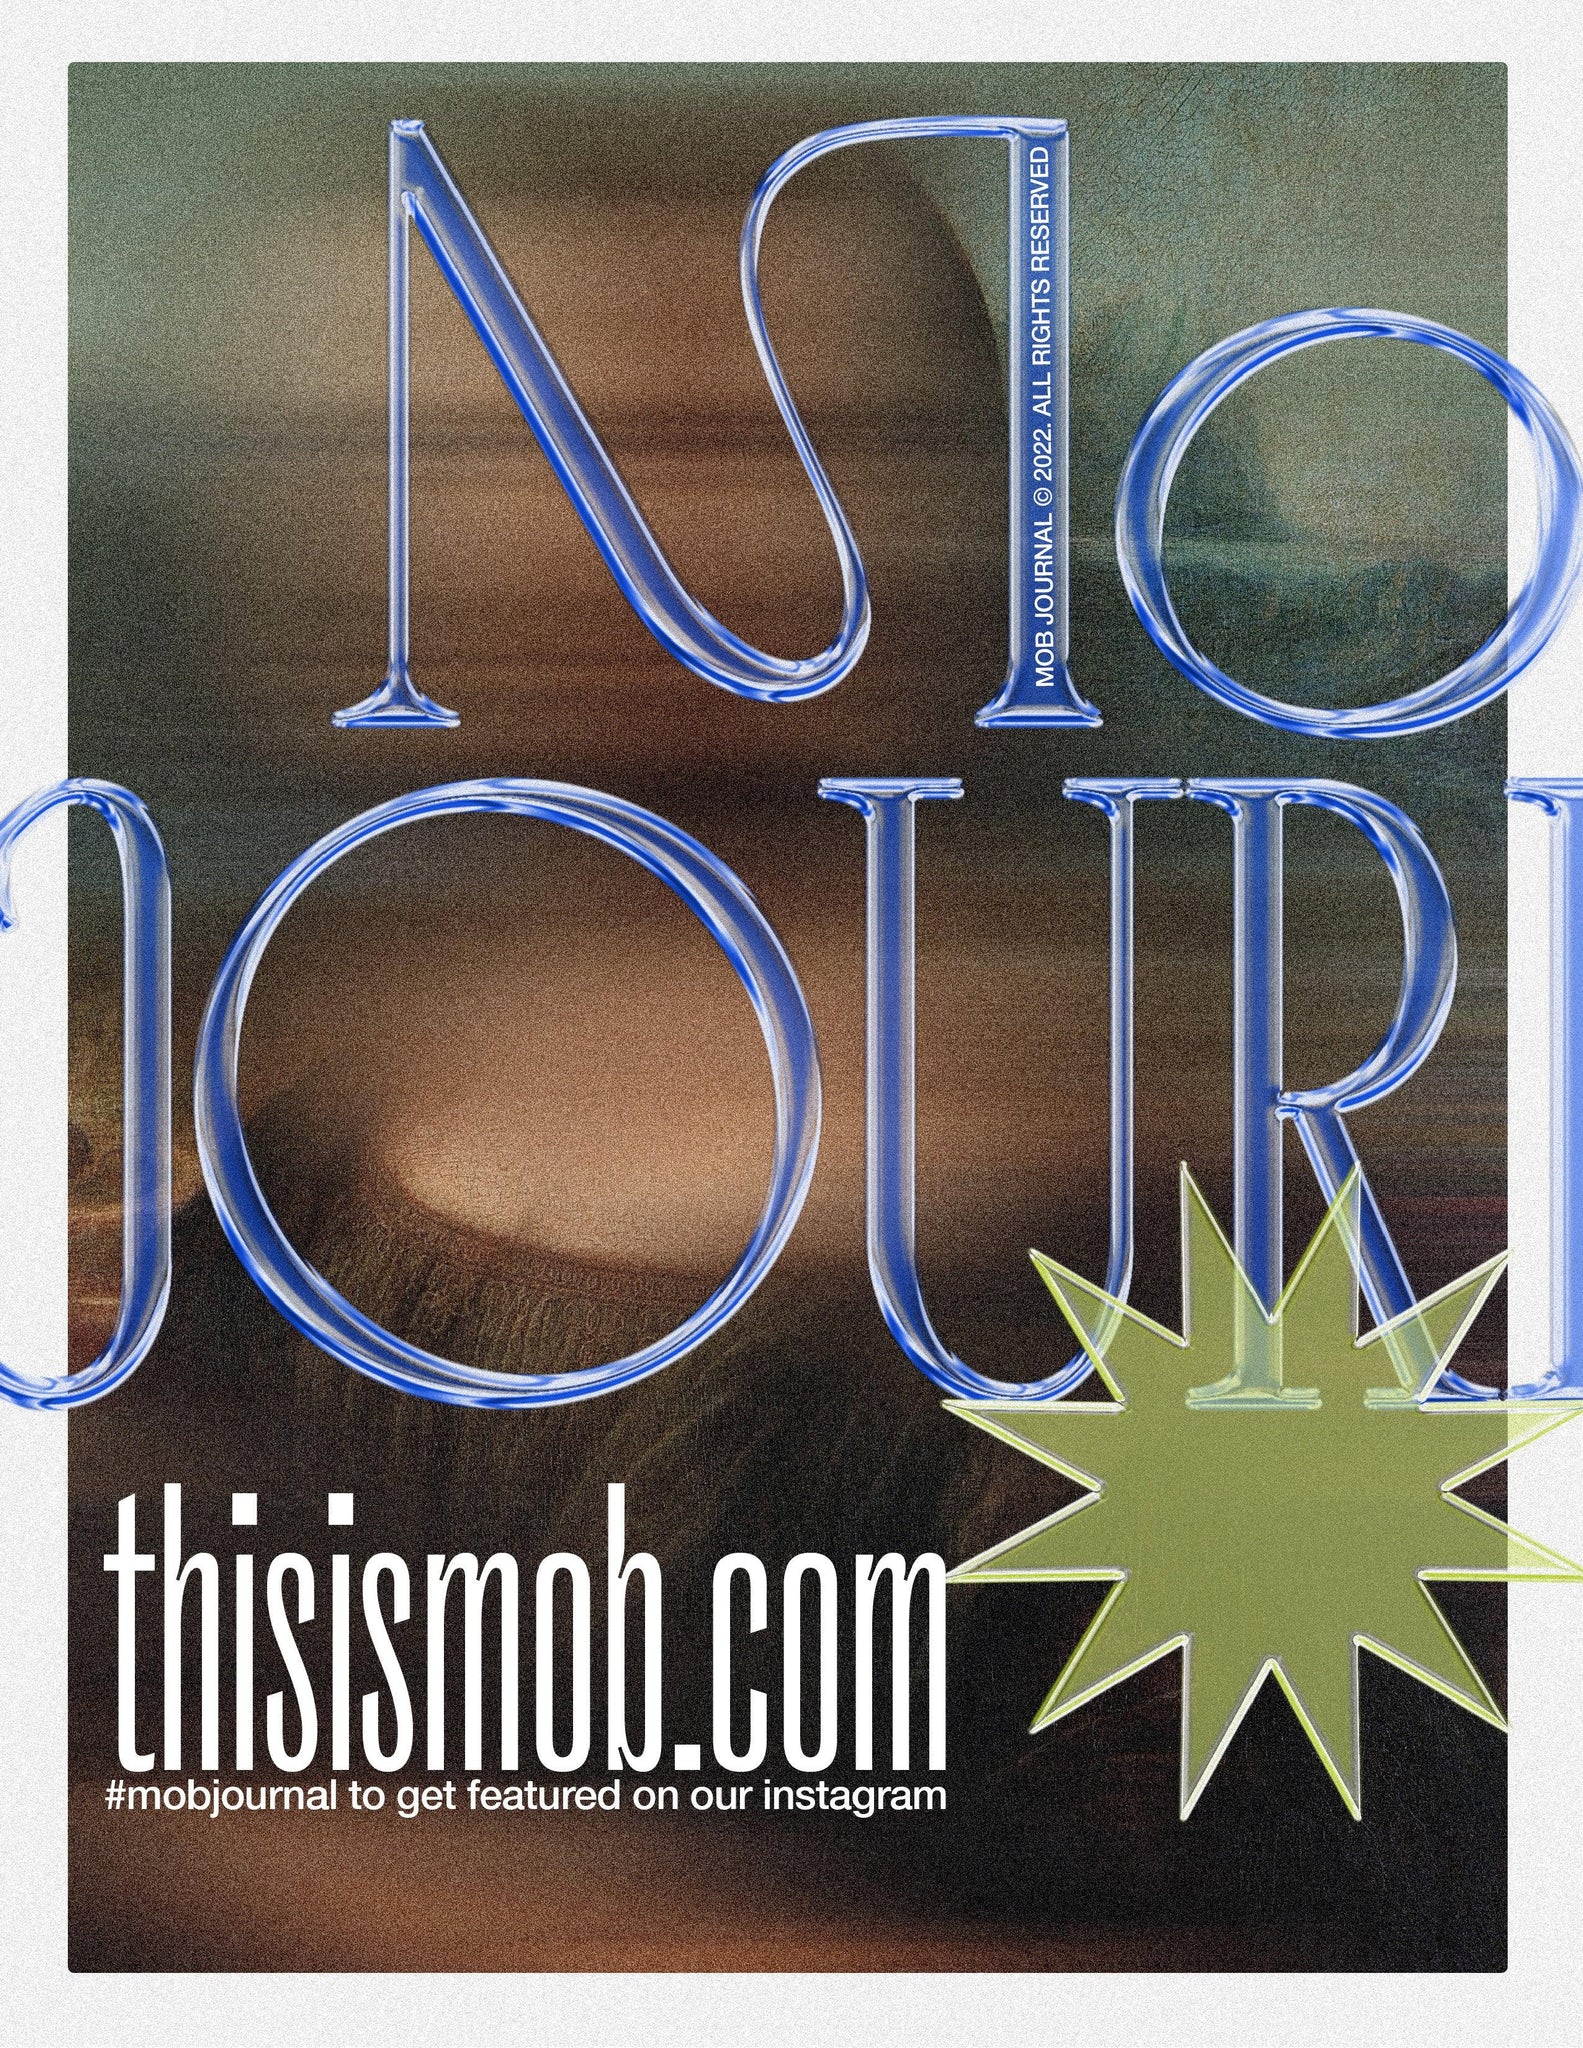 MOB JOURNAL | VOLUME TWENTY SIX | ISSUE #13 - Mob Journal